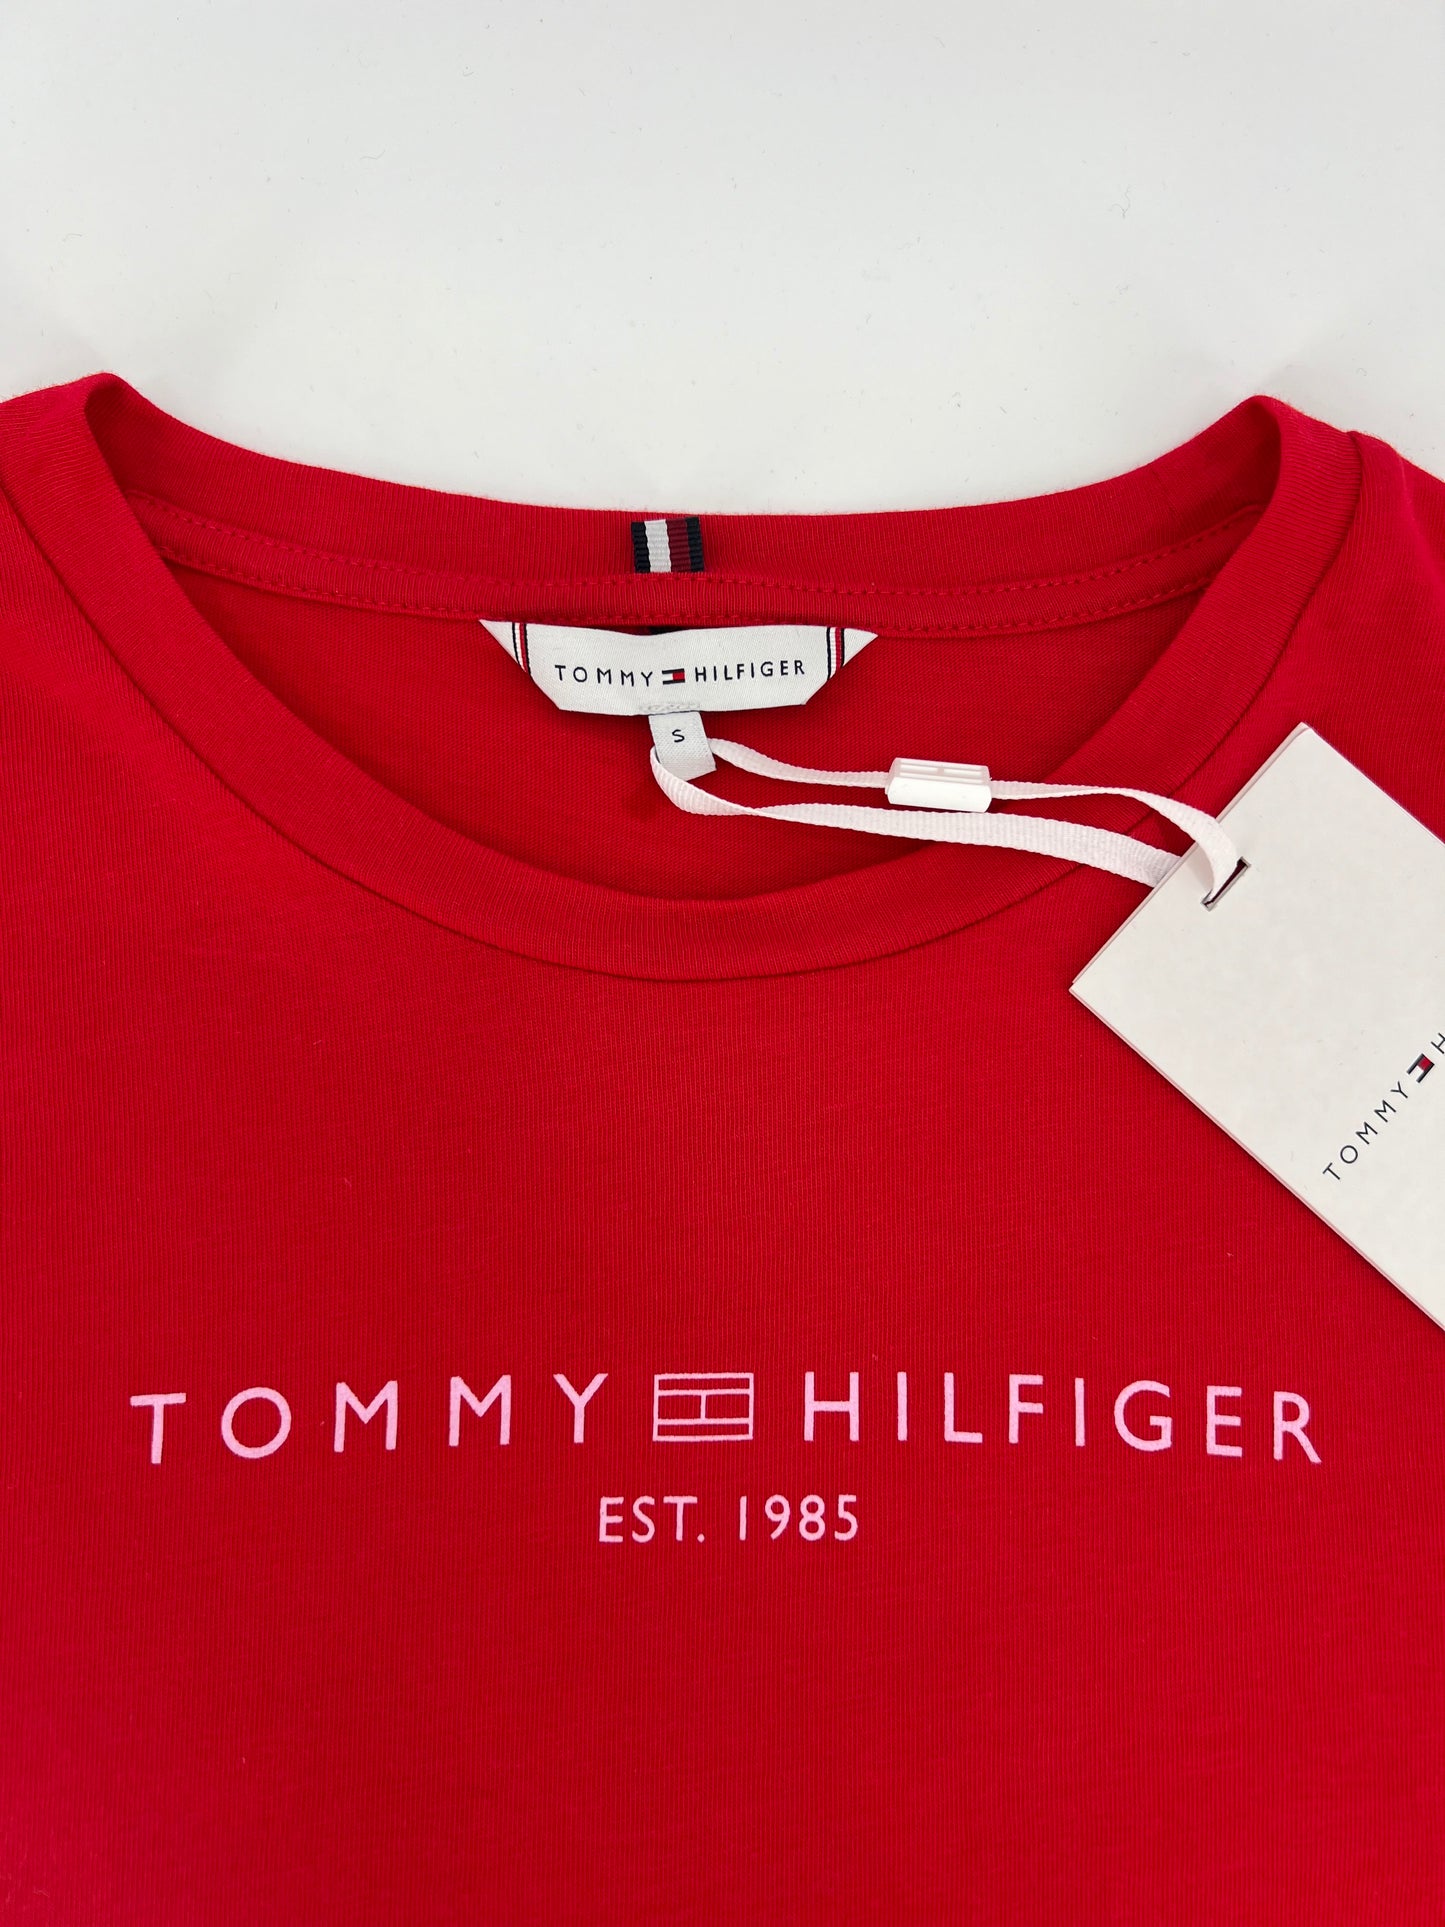 TOMMY HILFIGER - Tee shirt manche courte - Logo